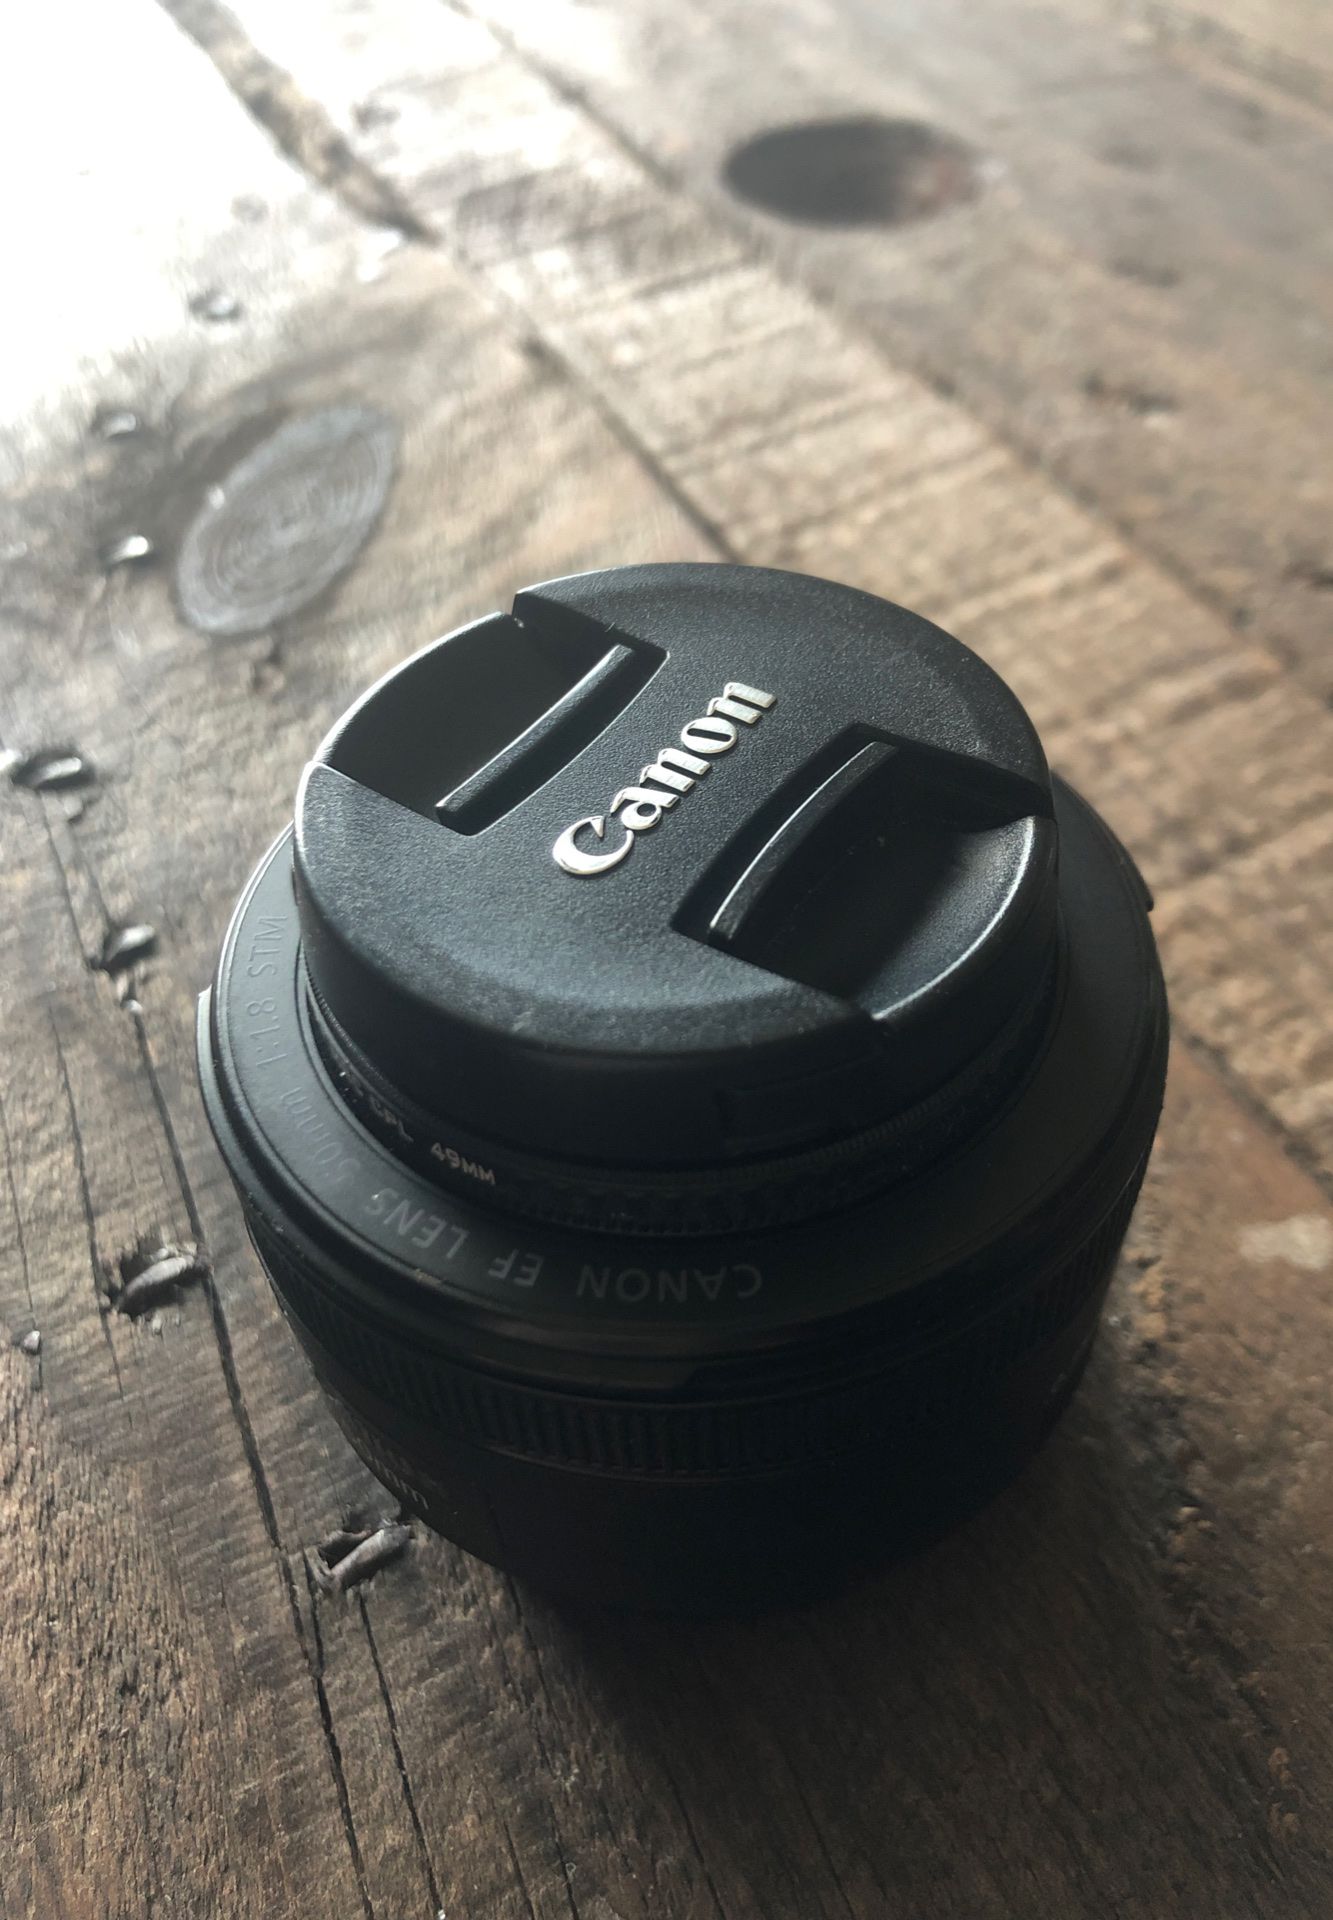 50mm Canon Lens